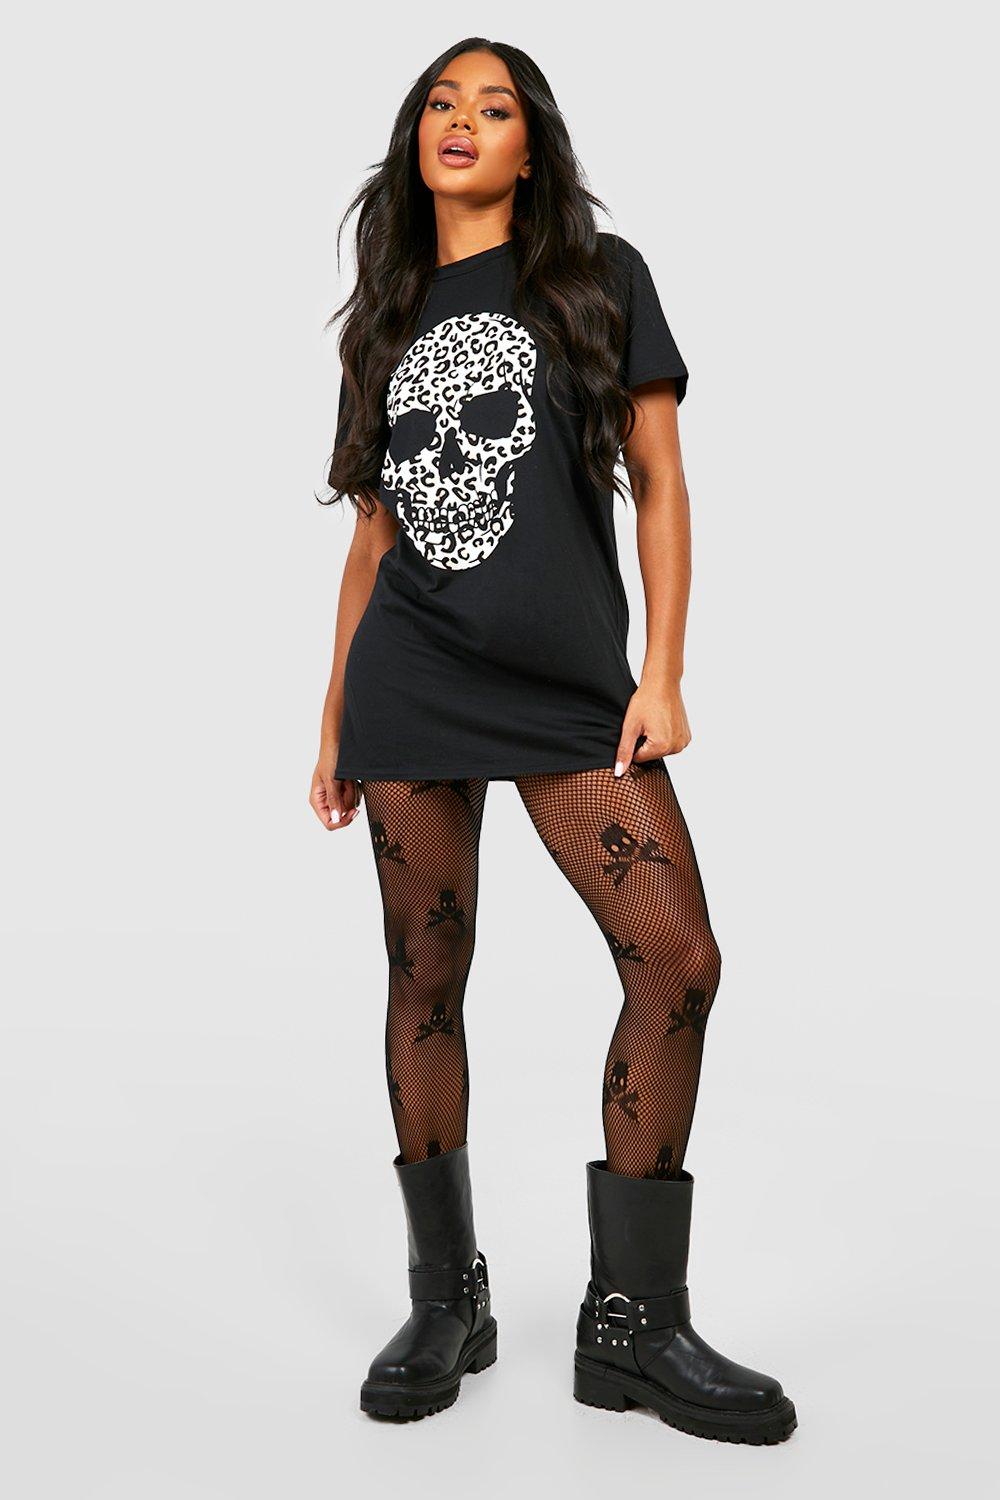 https://media.boohoo.com/i/boohoo/lzz00665_black_xl_1/female-halloween-skull-fishnet-tights